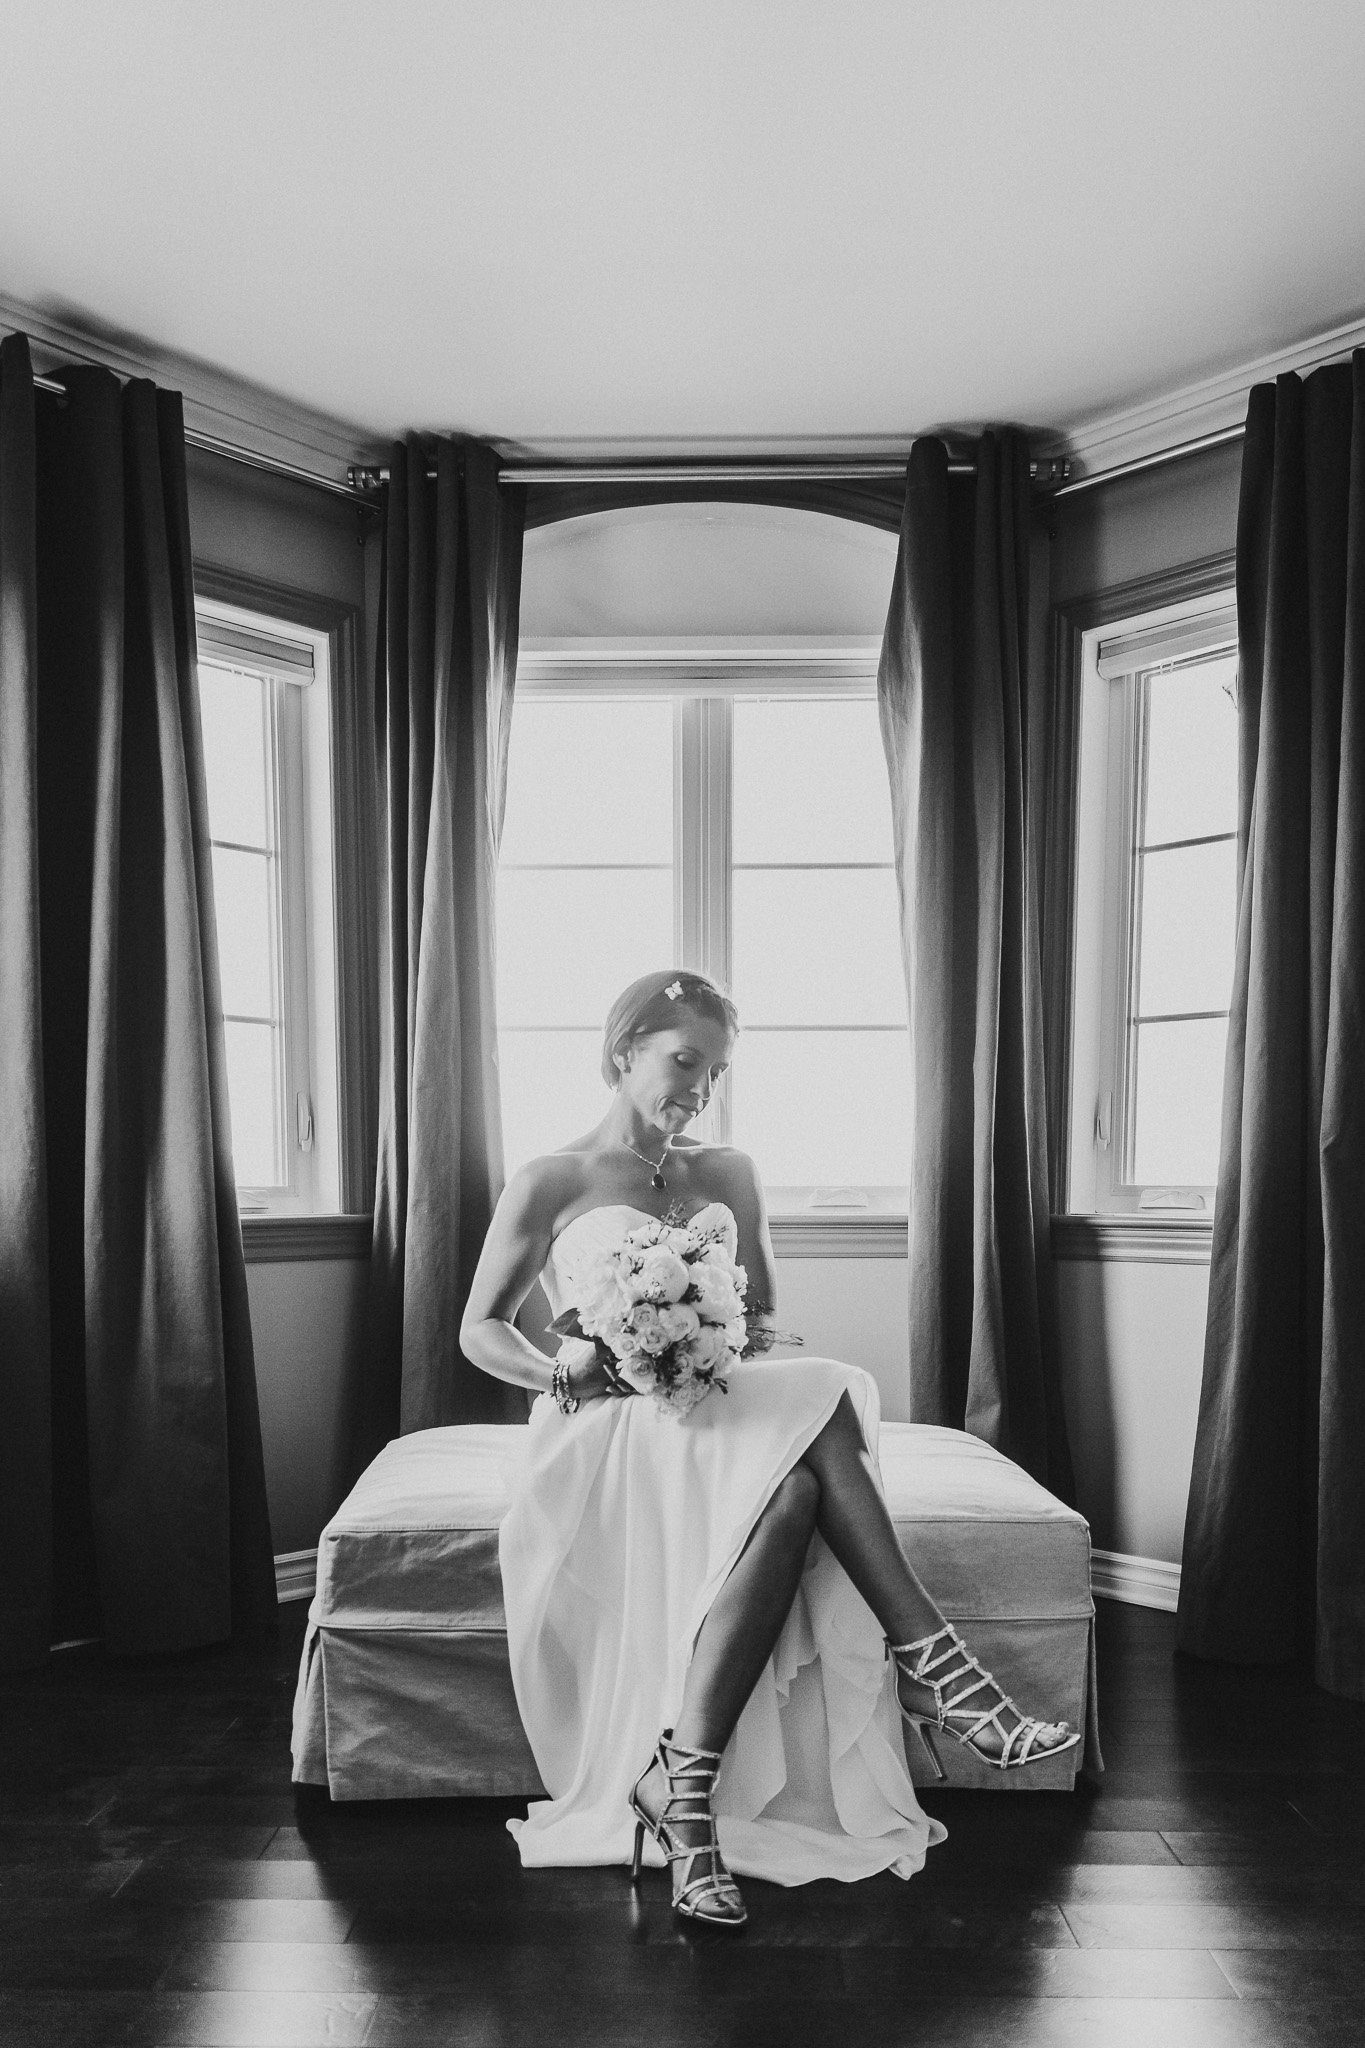 Lucy-Baum-Montreal-Wedding-Photographer-Ristorante-Beatrice-Bice-8.jpg